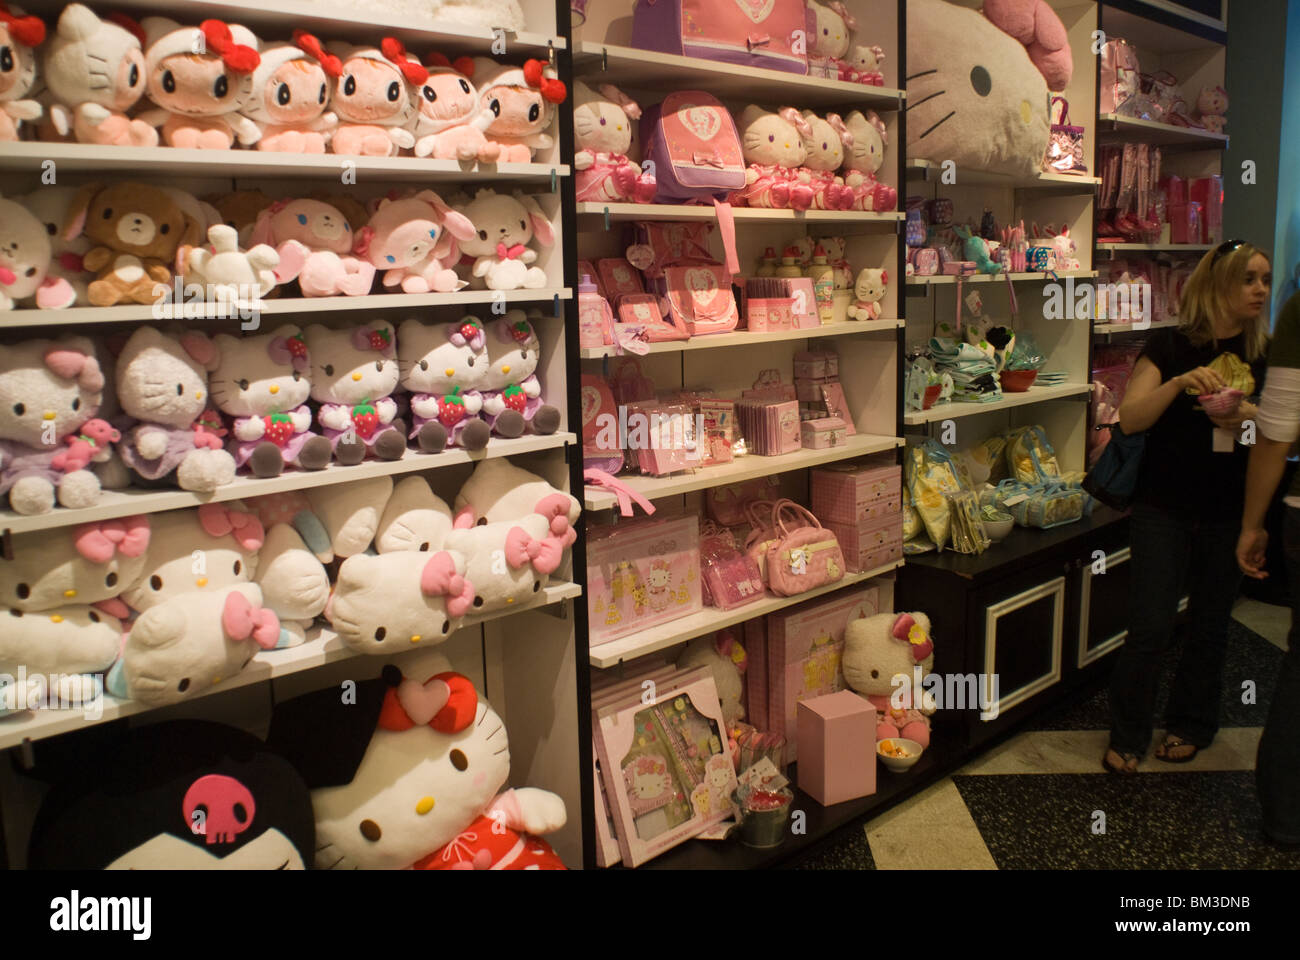 Hello Kitty!, Sanrio store Times Sq, NYC, Jennifer